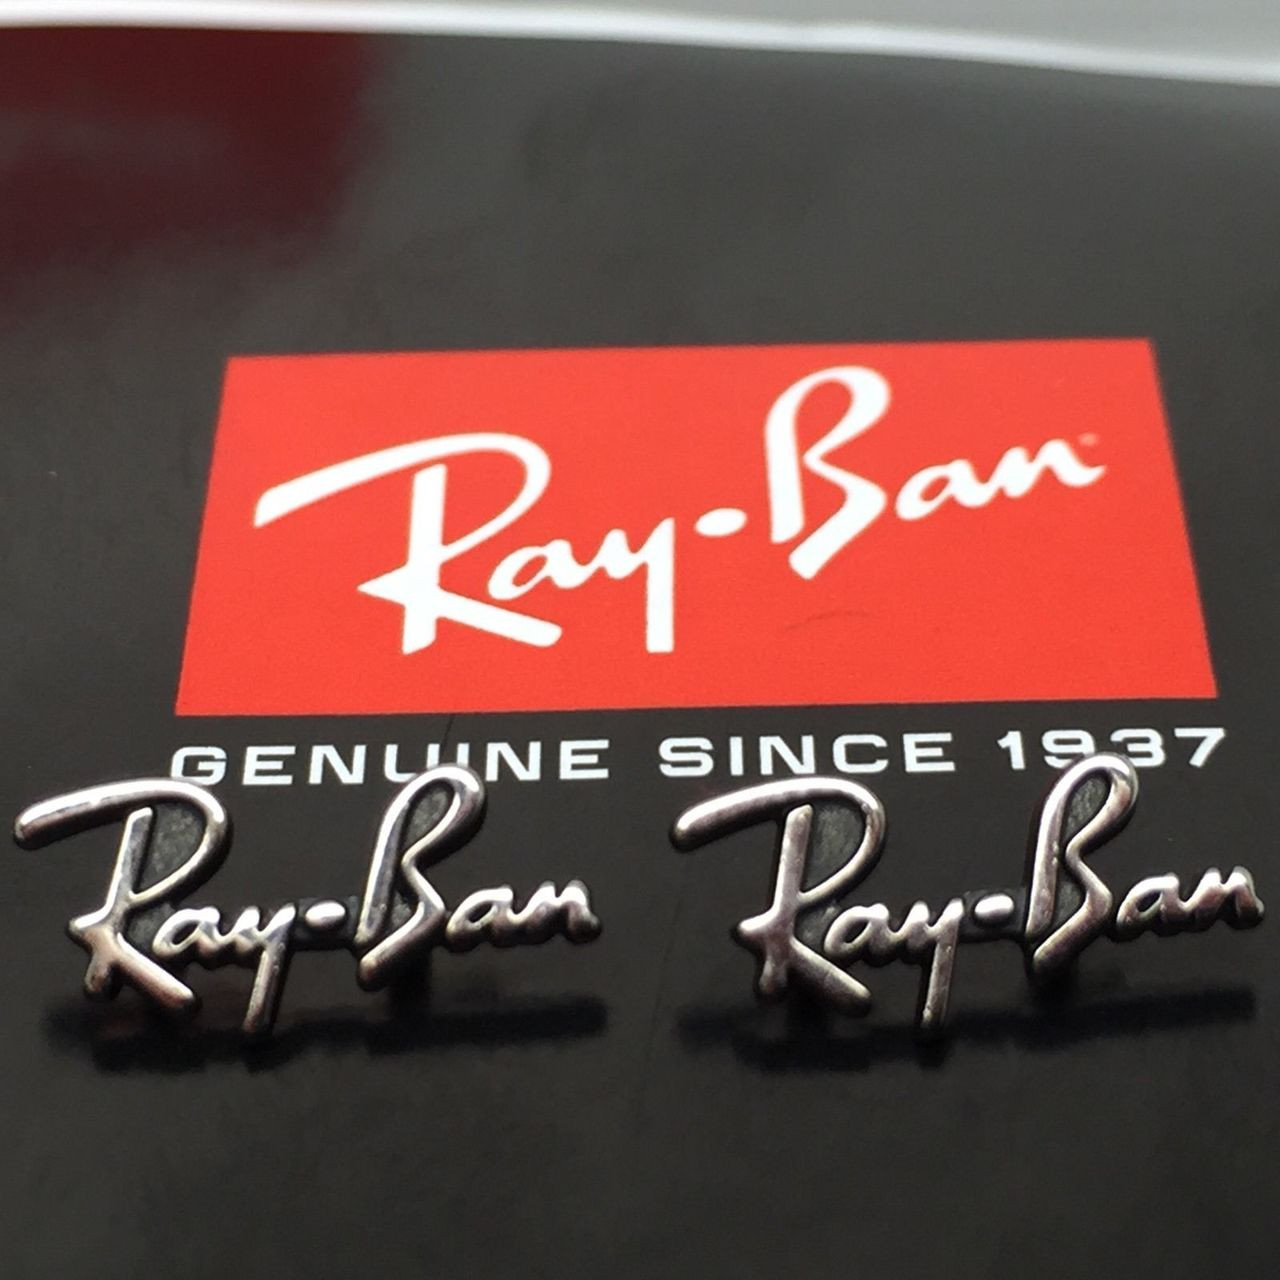 ray ban emblem replacement